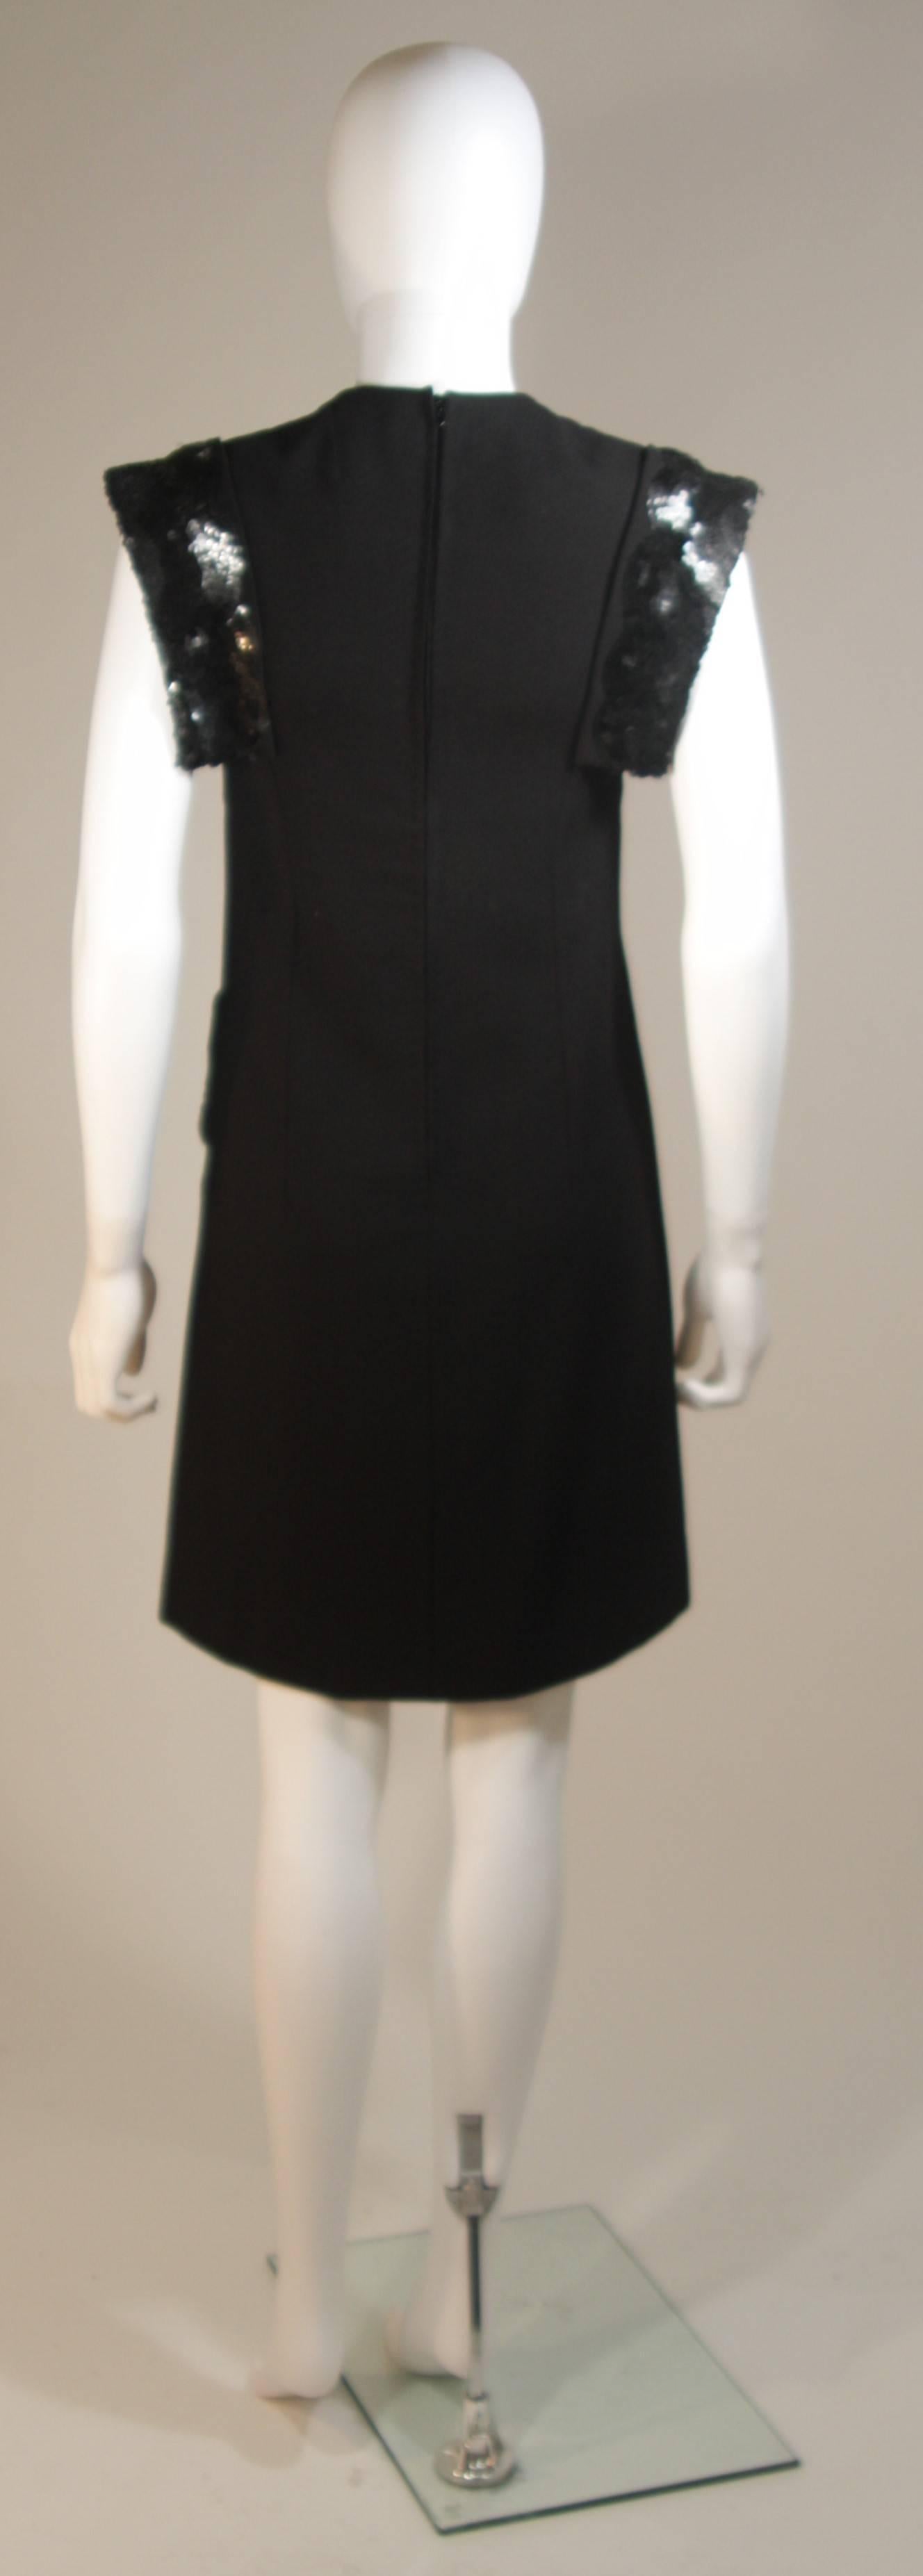 CARVEN COUTURE PARIS 1960's Black Sequin Dress with Structured Shoulders Size 2 For Sale 3